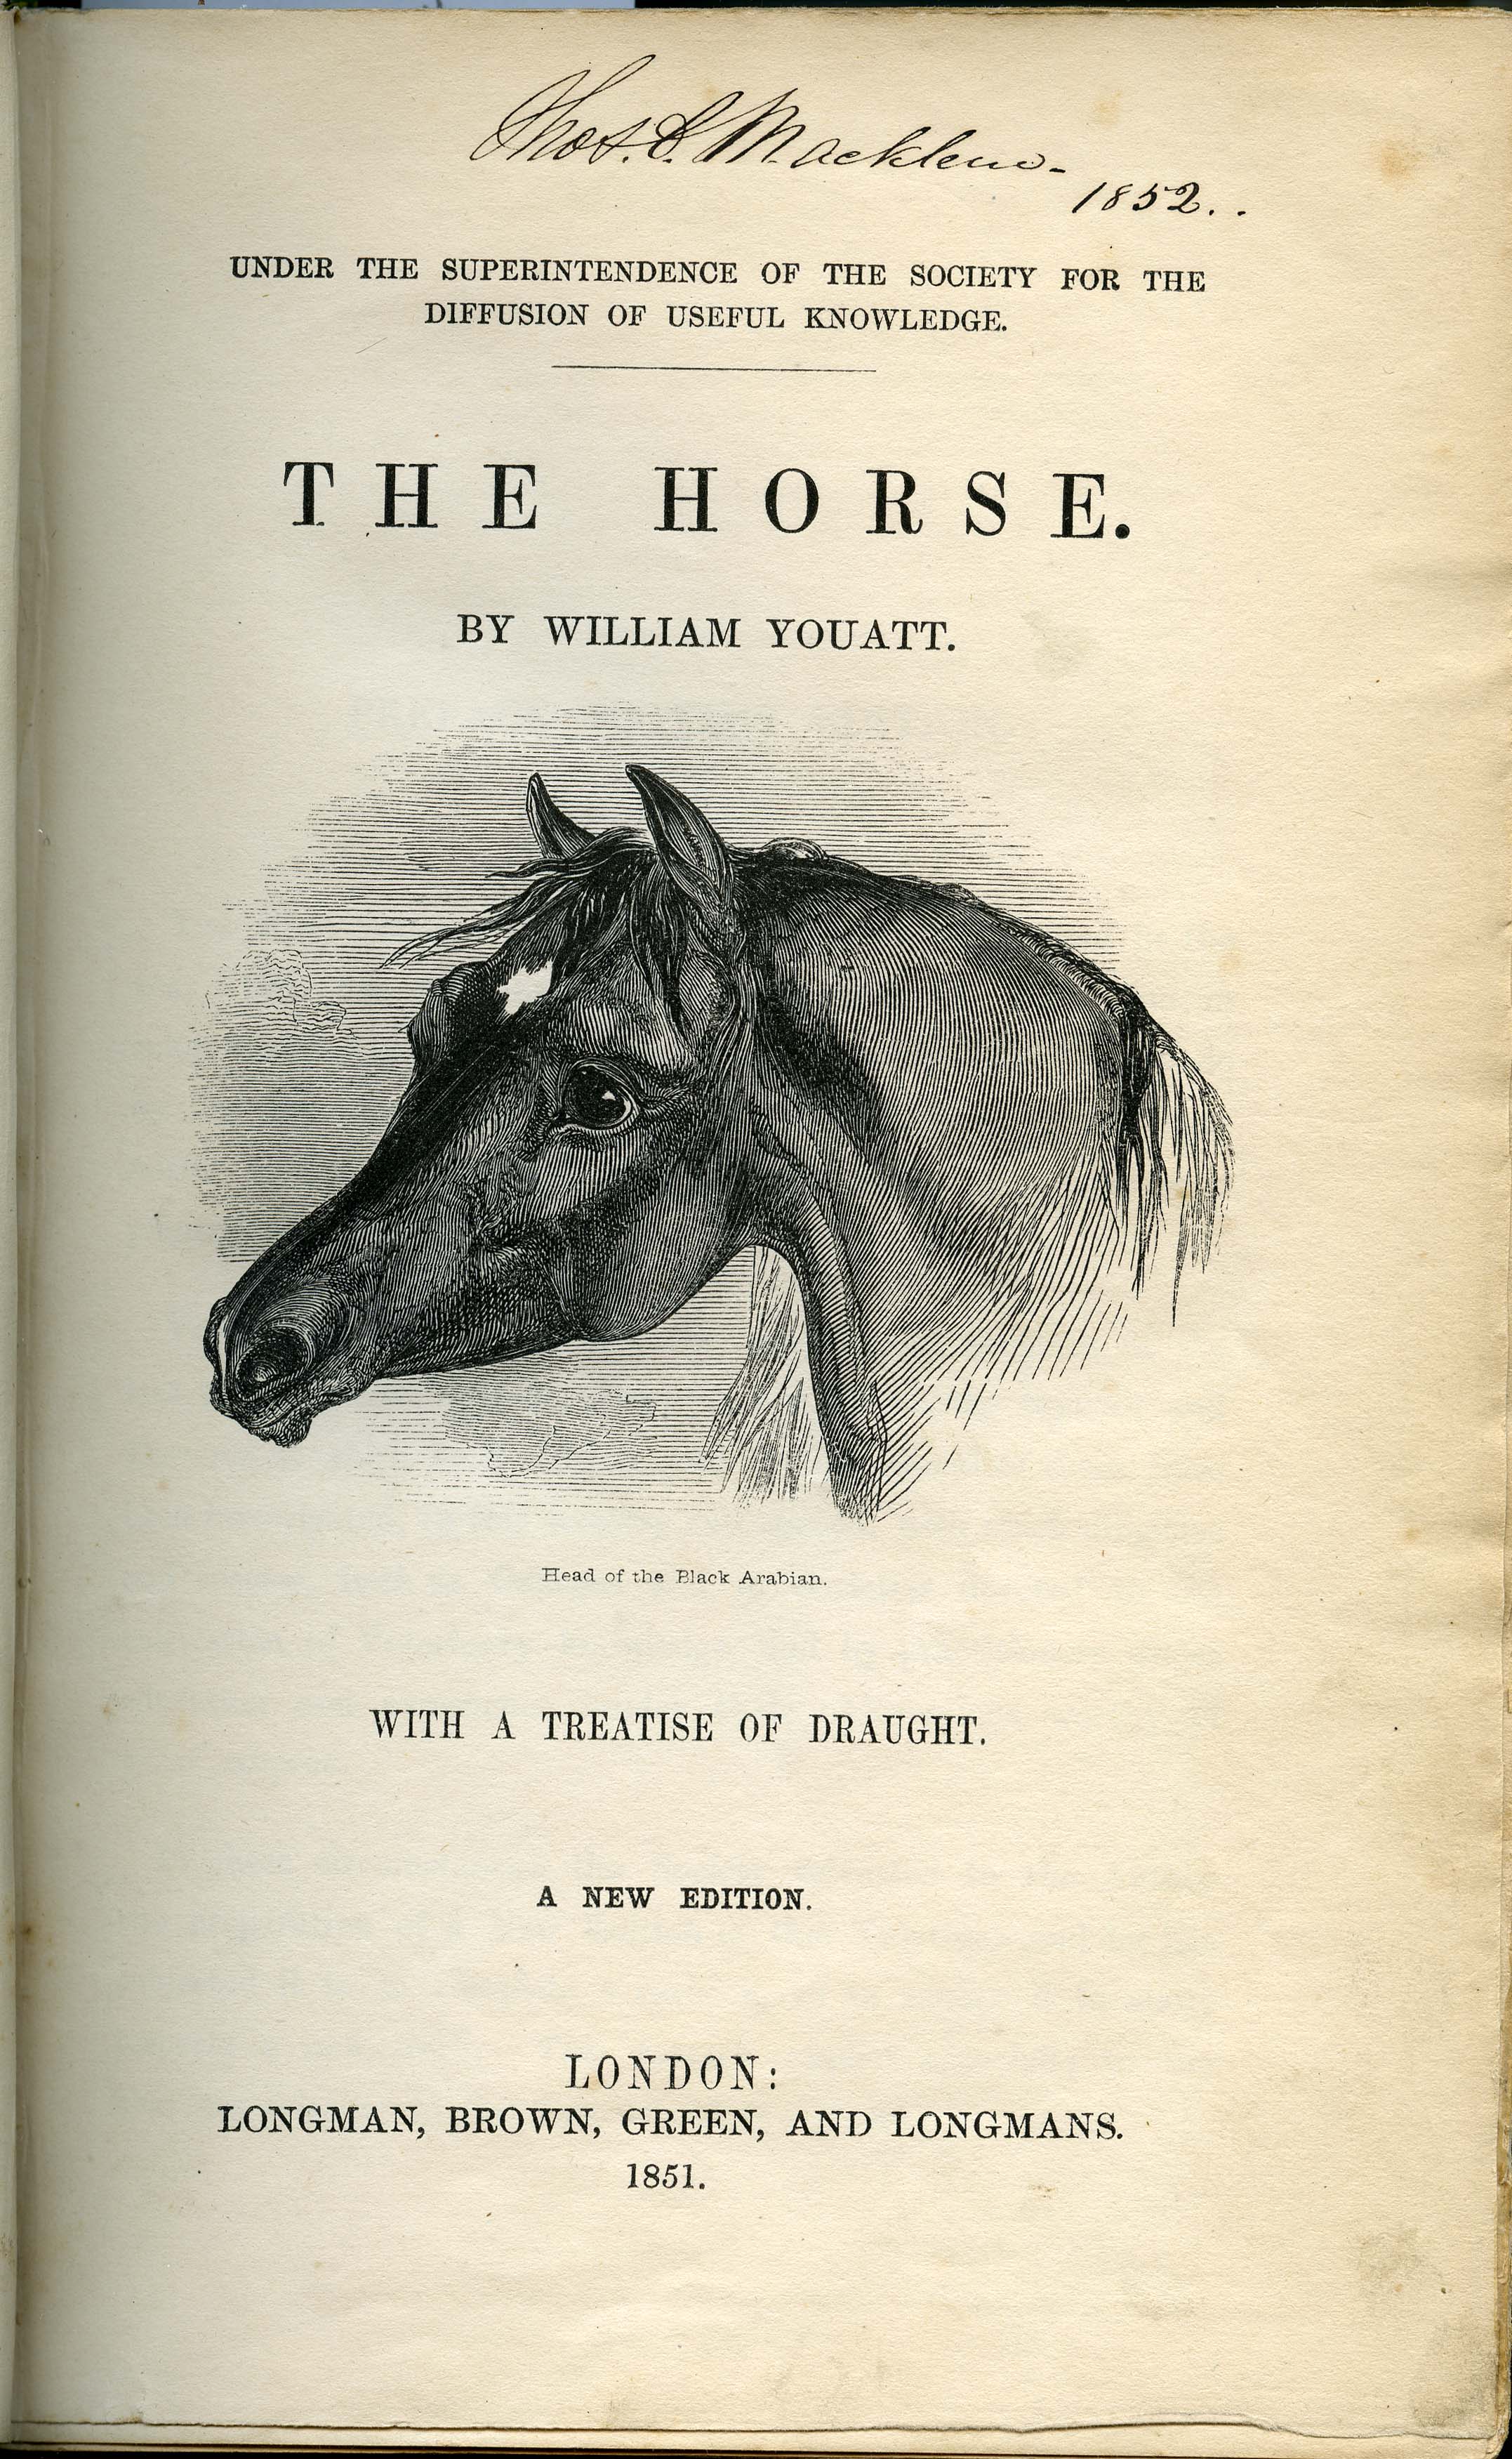 Youatt's The Horse